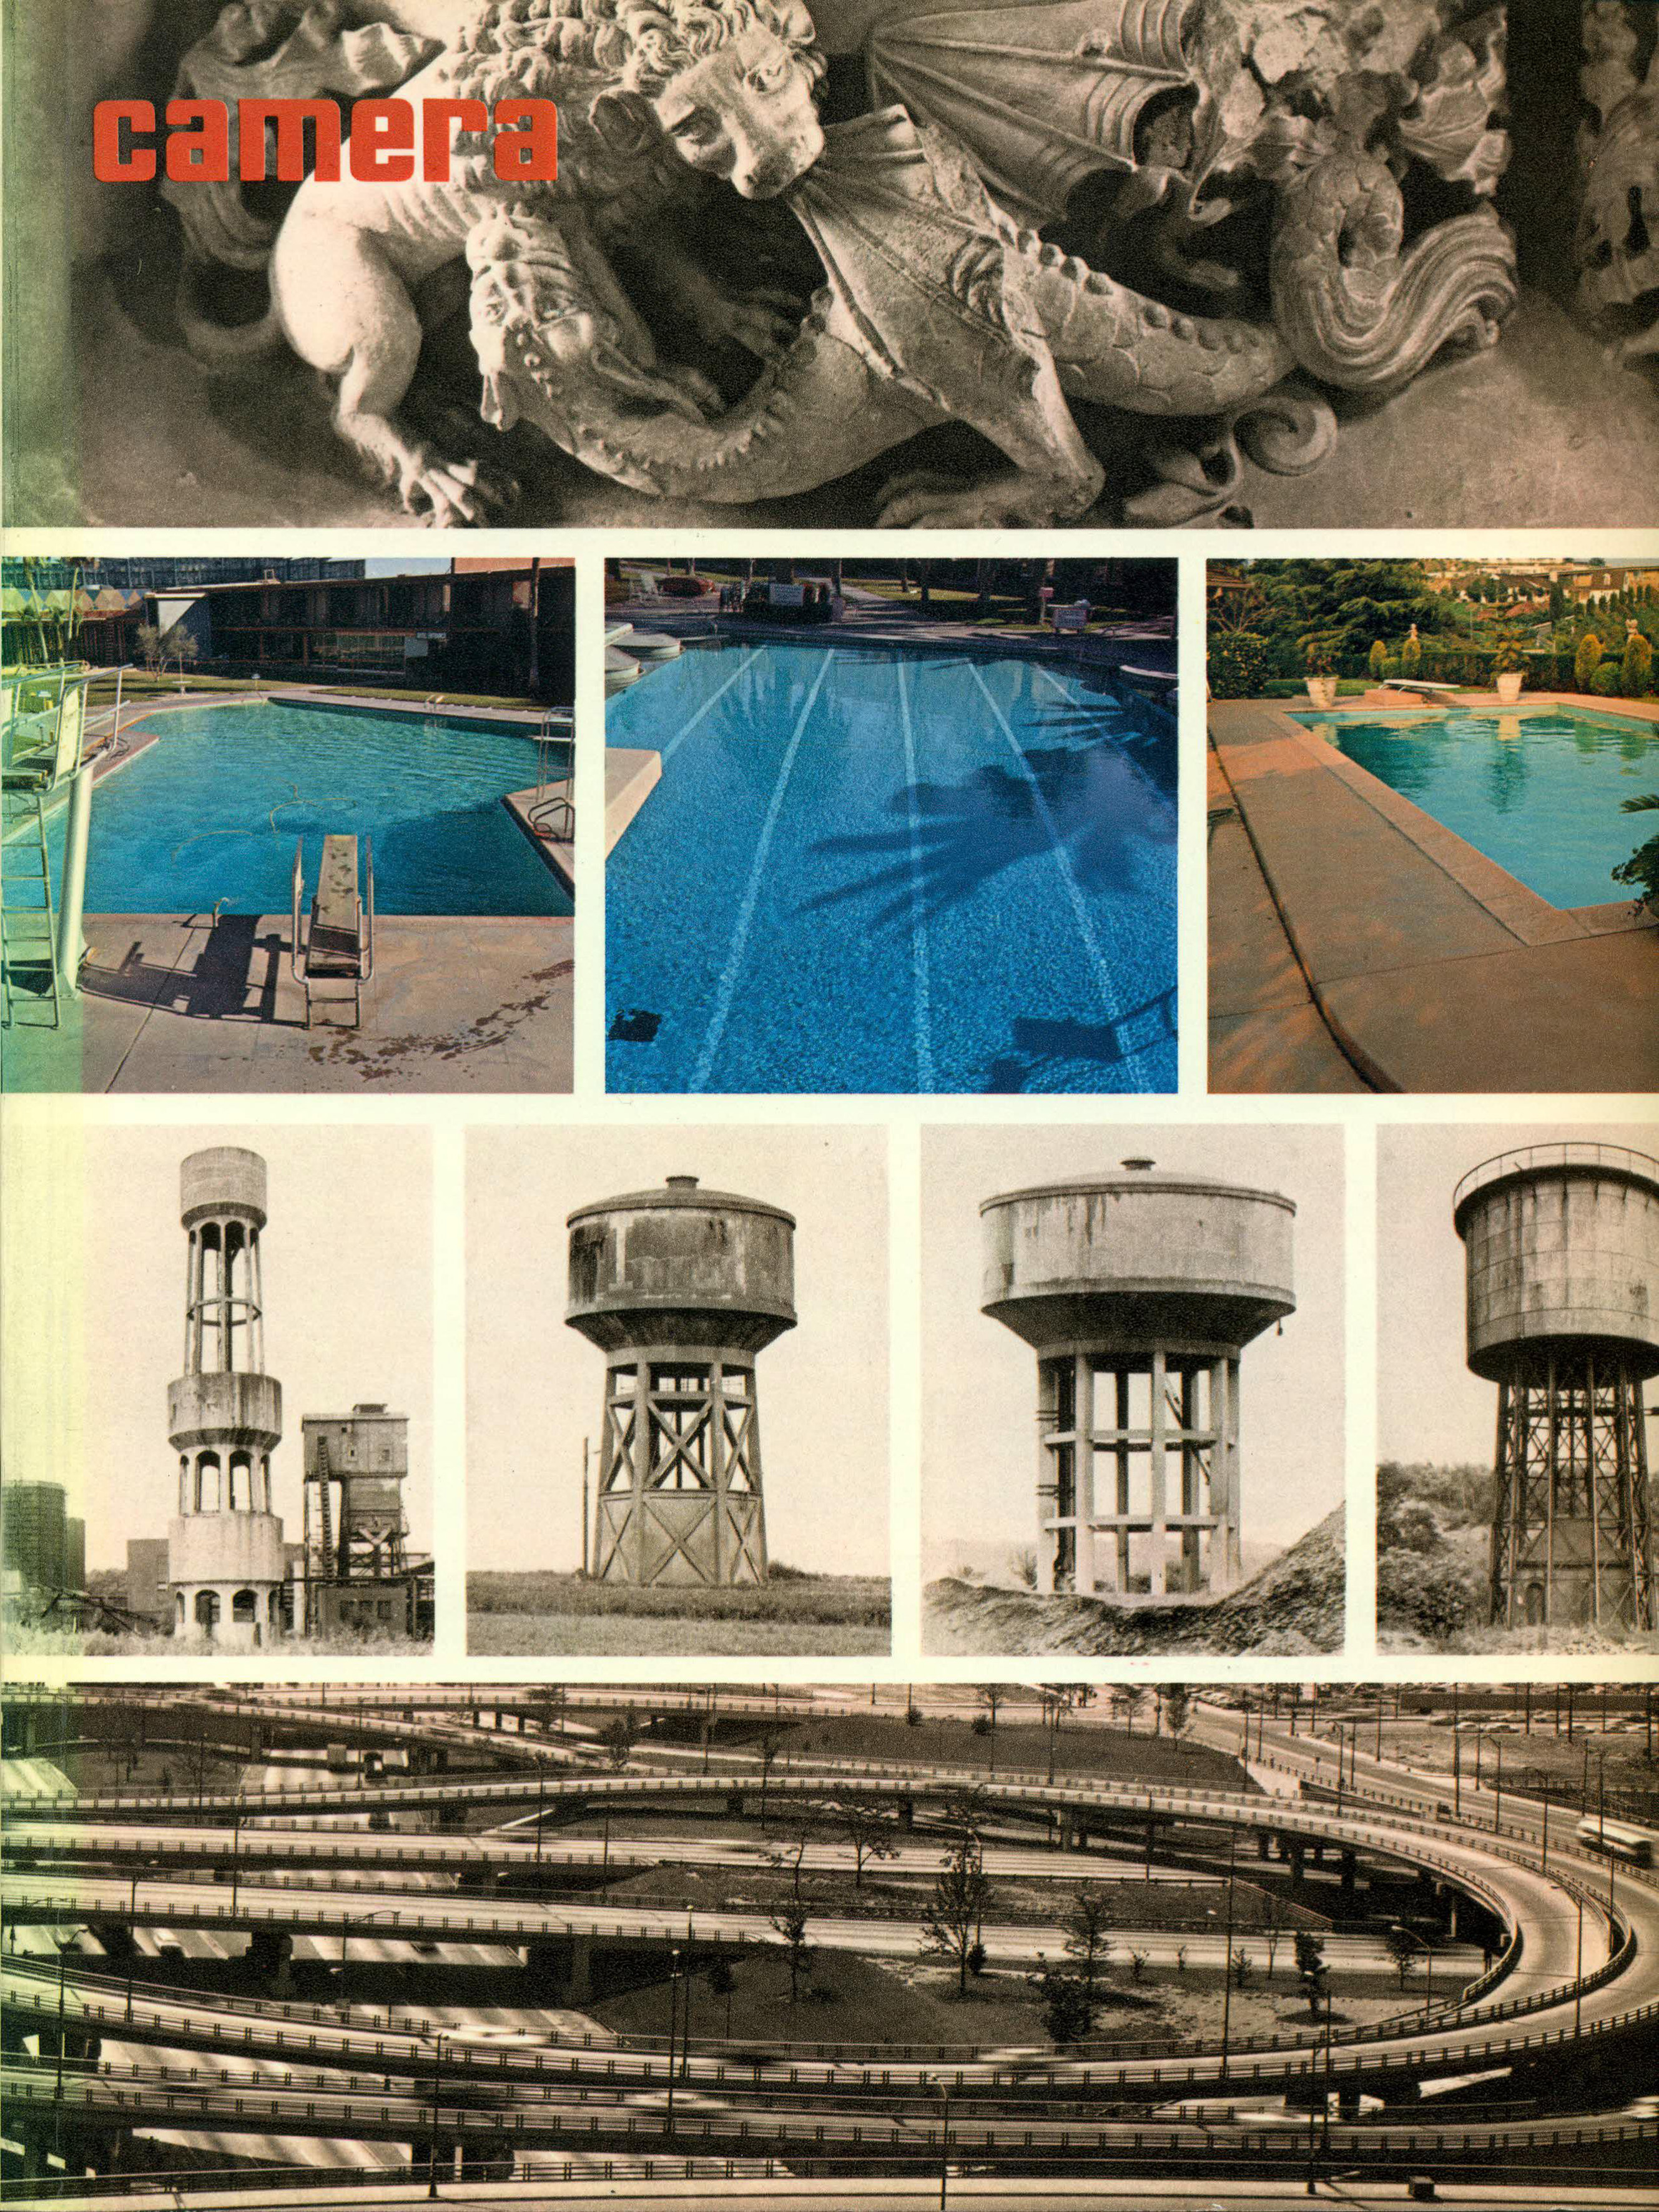  Camera Nr. 6, Juni 1972, C. J. Bucher Verlag Luzern, Schweiz, Titel. Evans, Platindruck; Ruscha, Ektachrome; Becher, Agfa; Sinsabaugh, Kodak Plus-X 